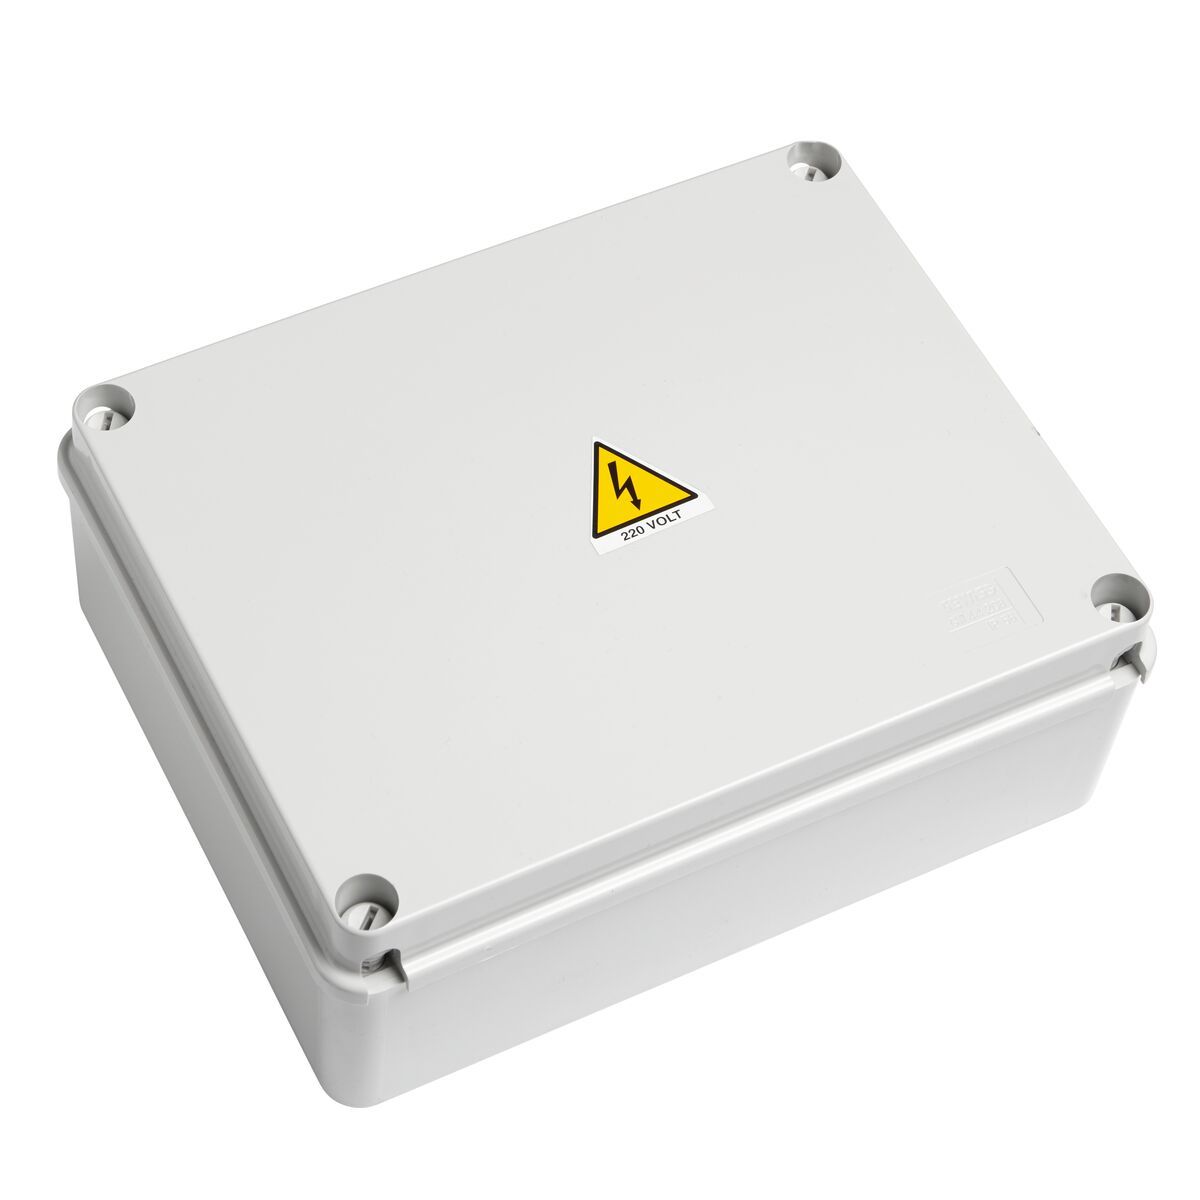 Vogel's PPA 906 Smartbox für PPL 2500 - Product